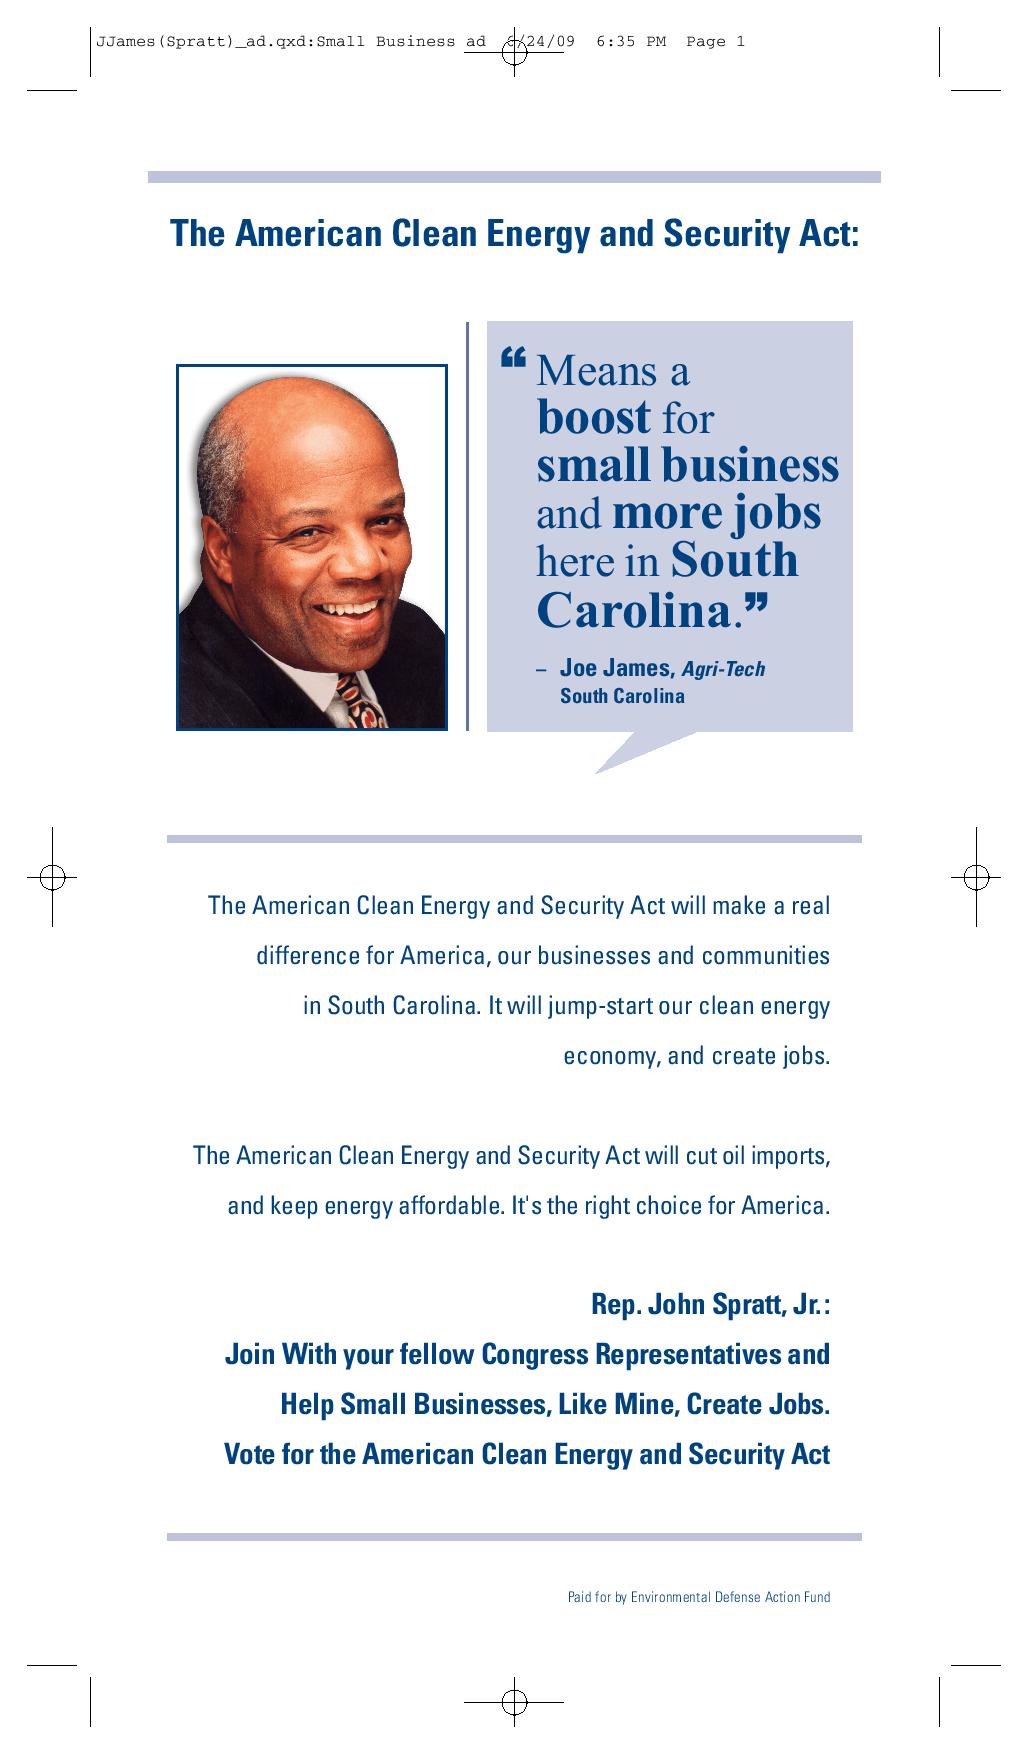 Help Small Businesses Create Jobs: John Spratt Jr.